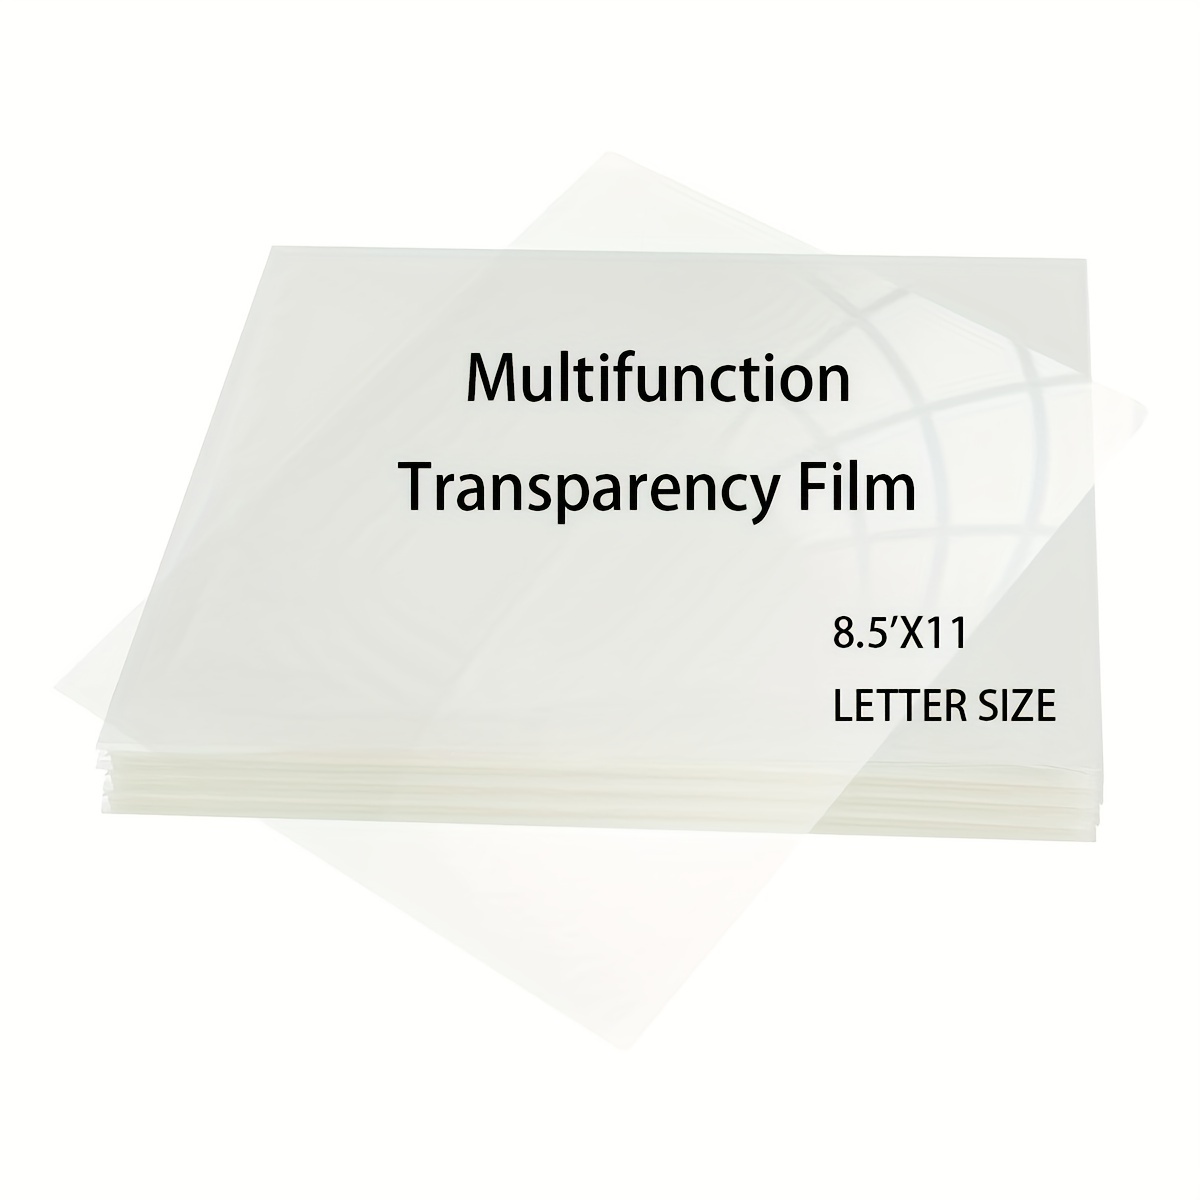 Uinkit 100 Sheets Laser Transparency Film 8.5x11 Transparent Paper